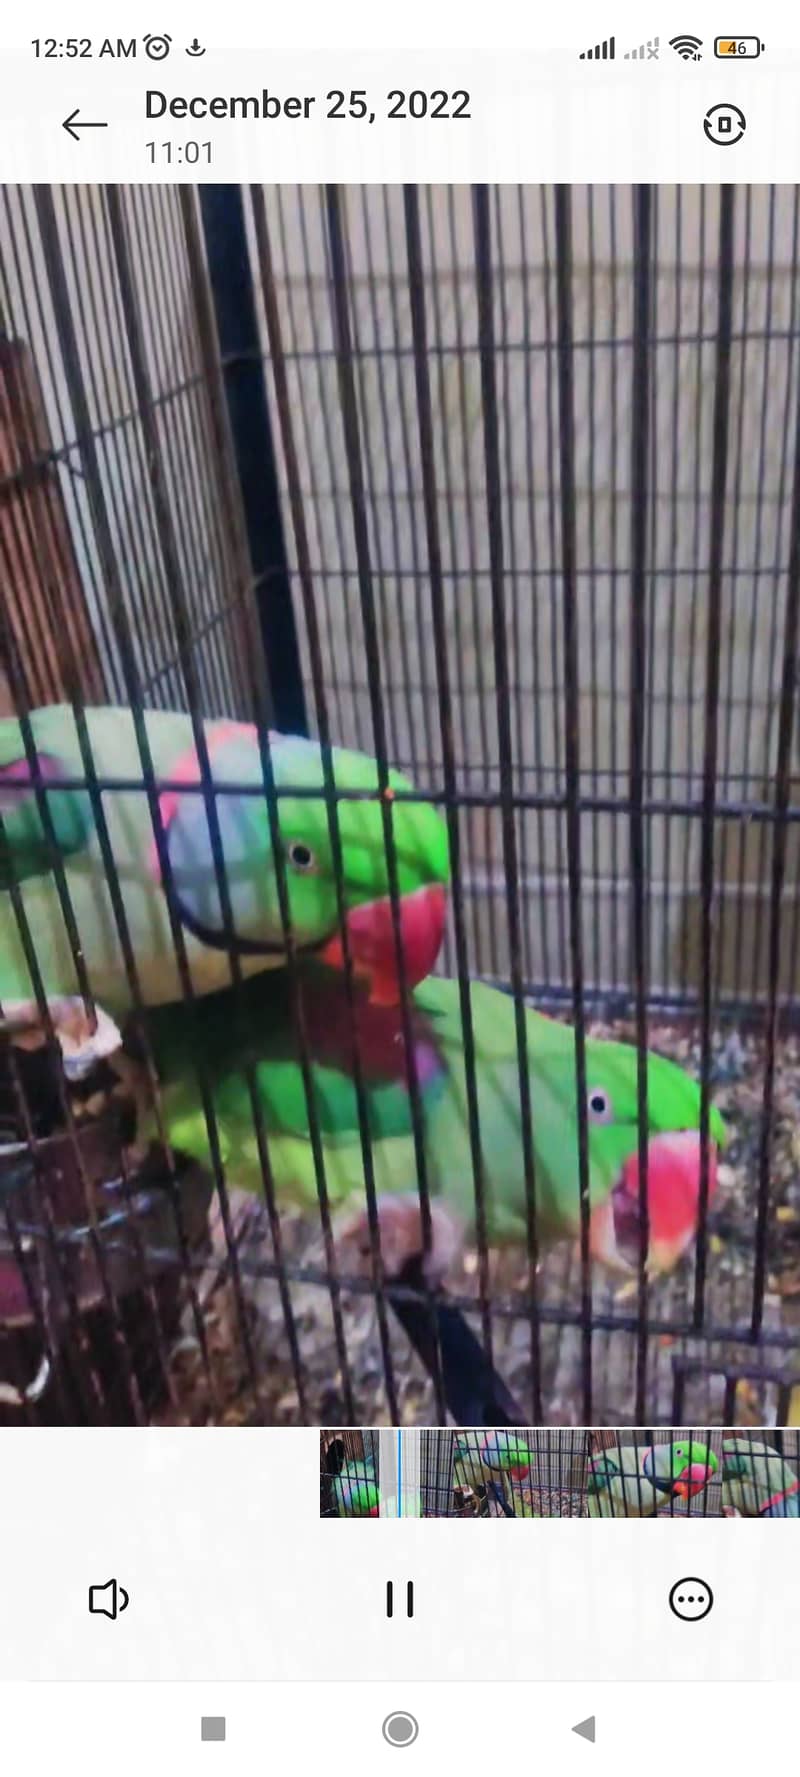 Raw parrot pair 0